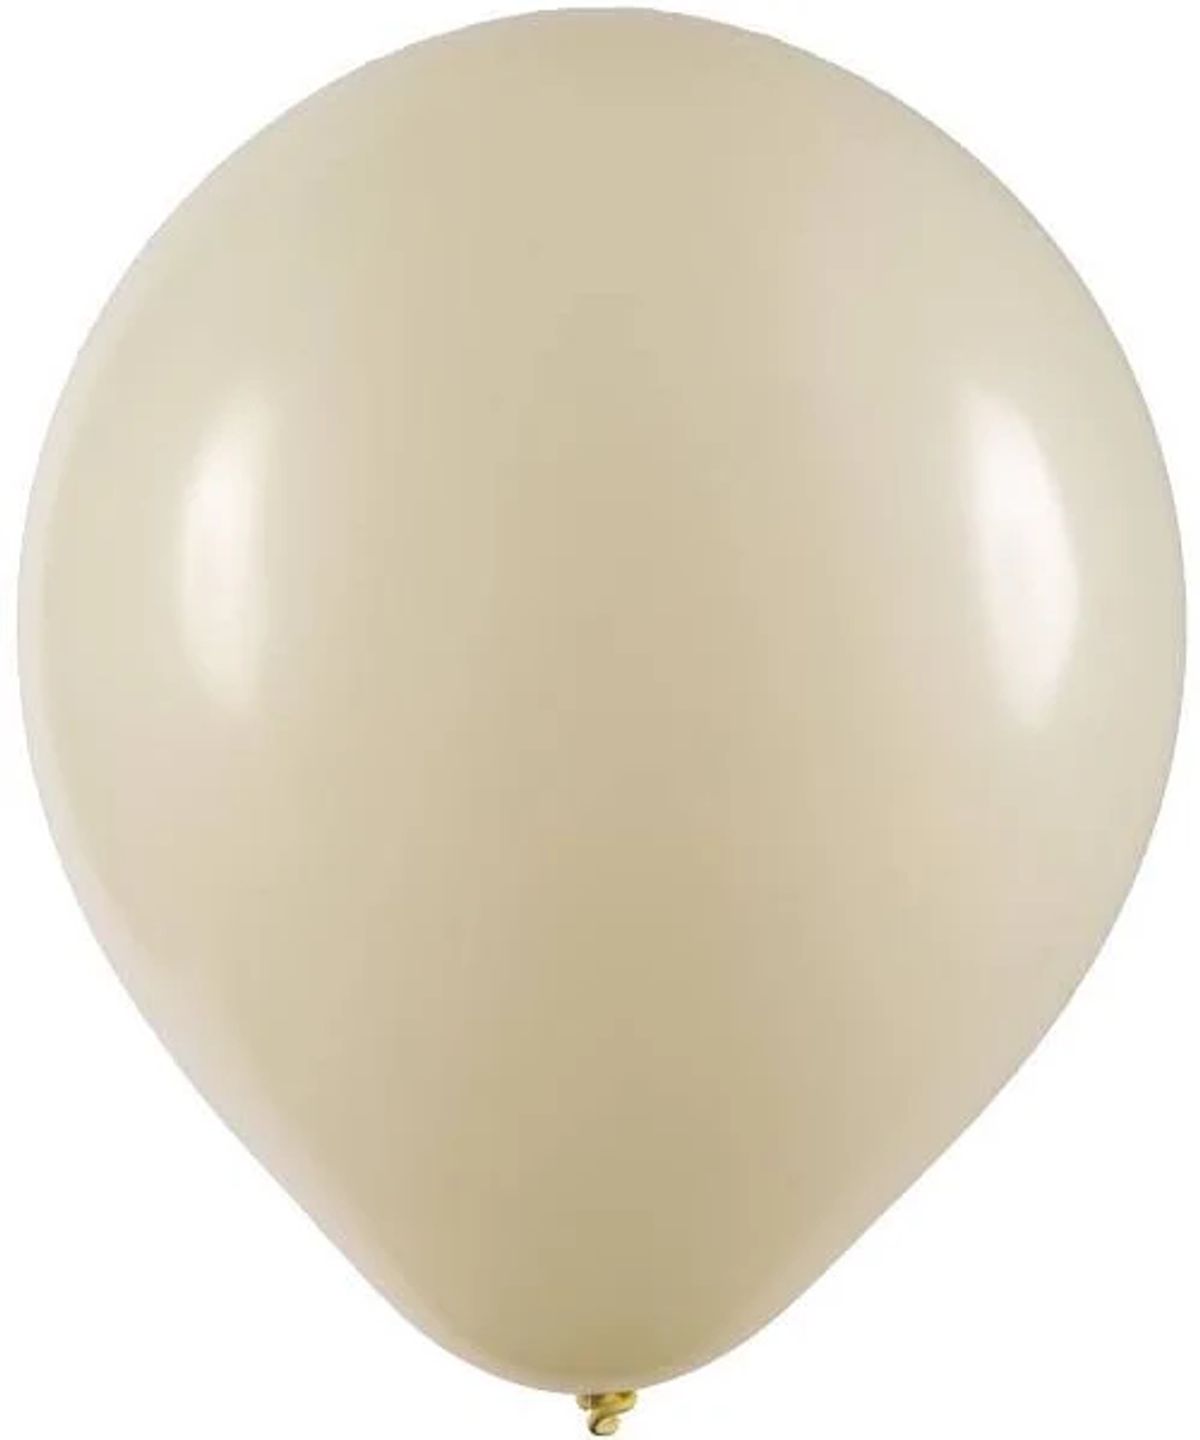 Balão Art Latex Buffet Nº 7 Liso Marfim 50 Unidades